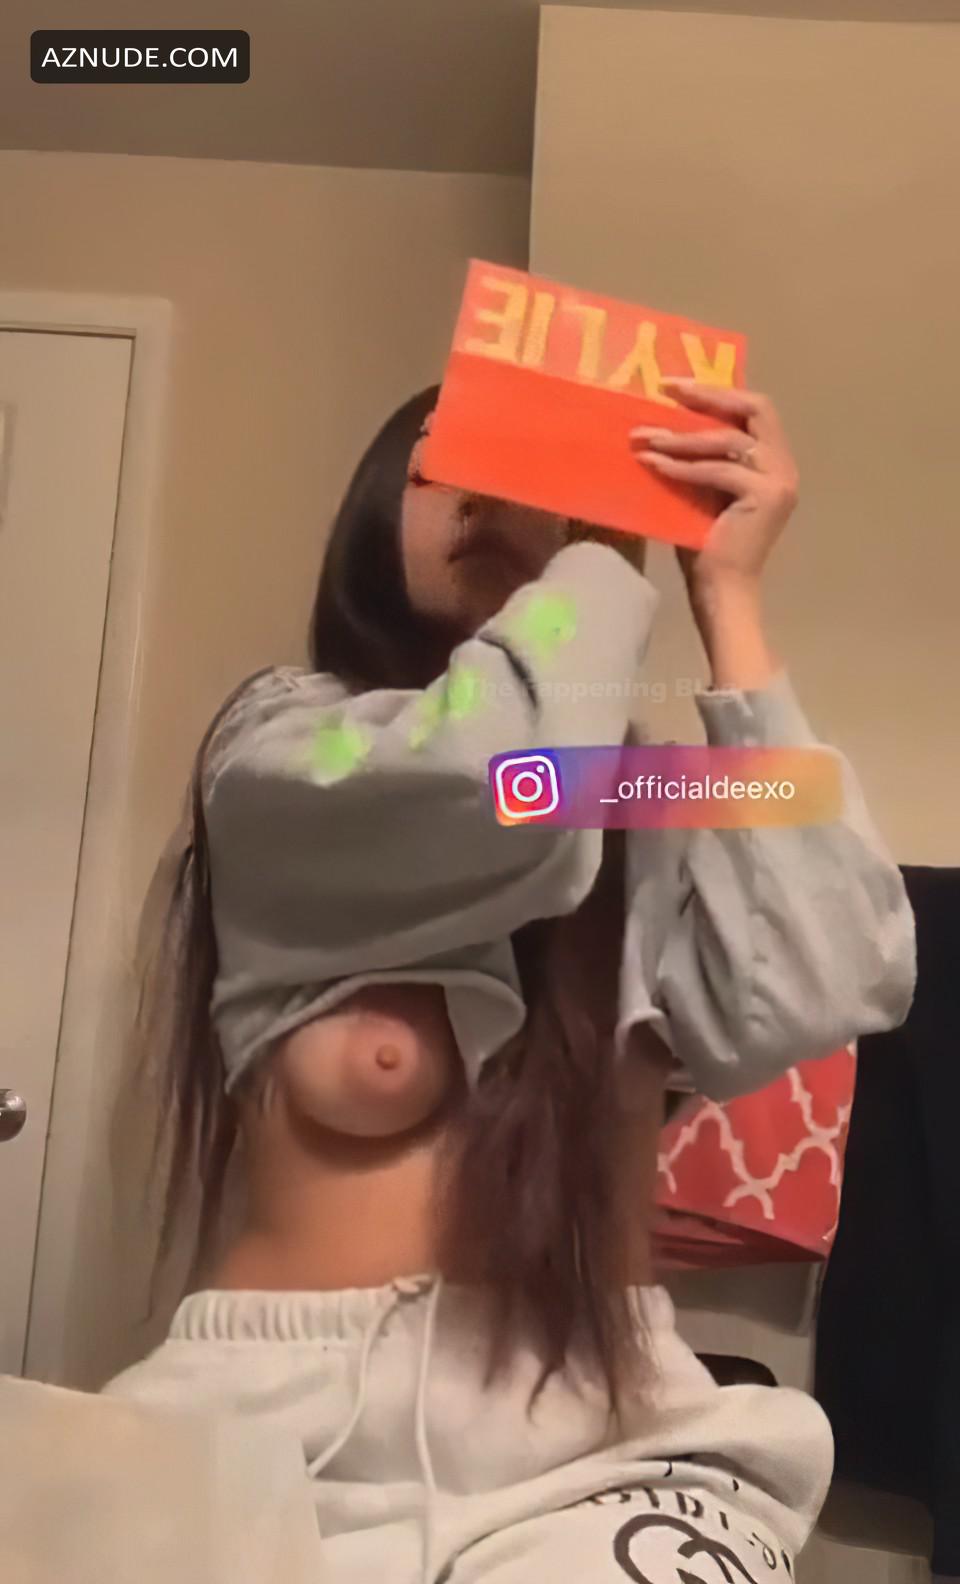 Instagram nipple slip